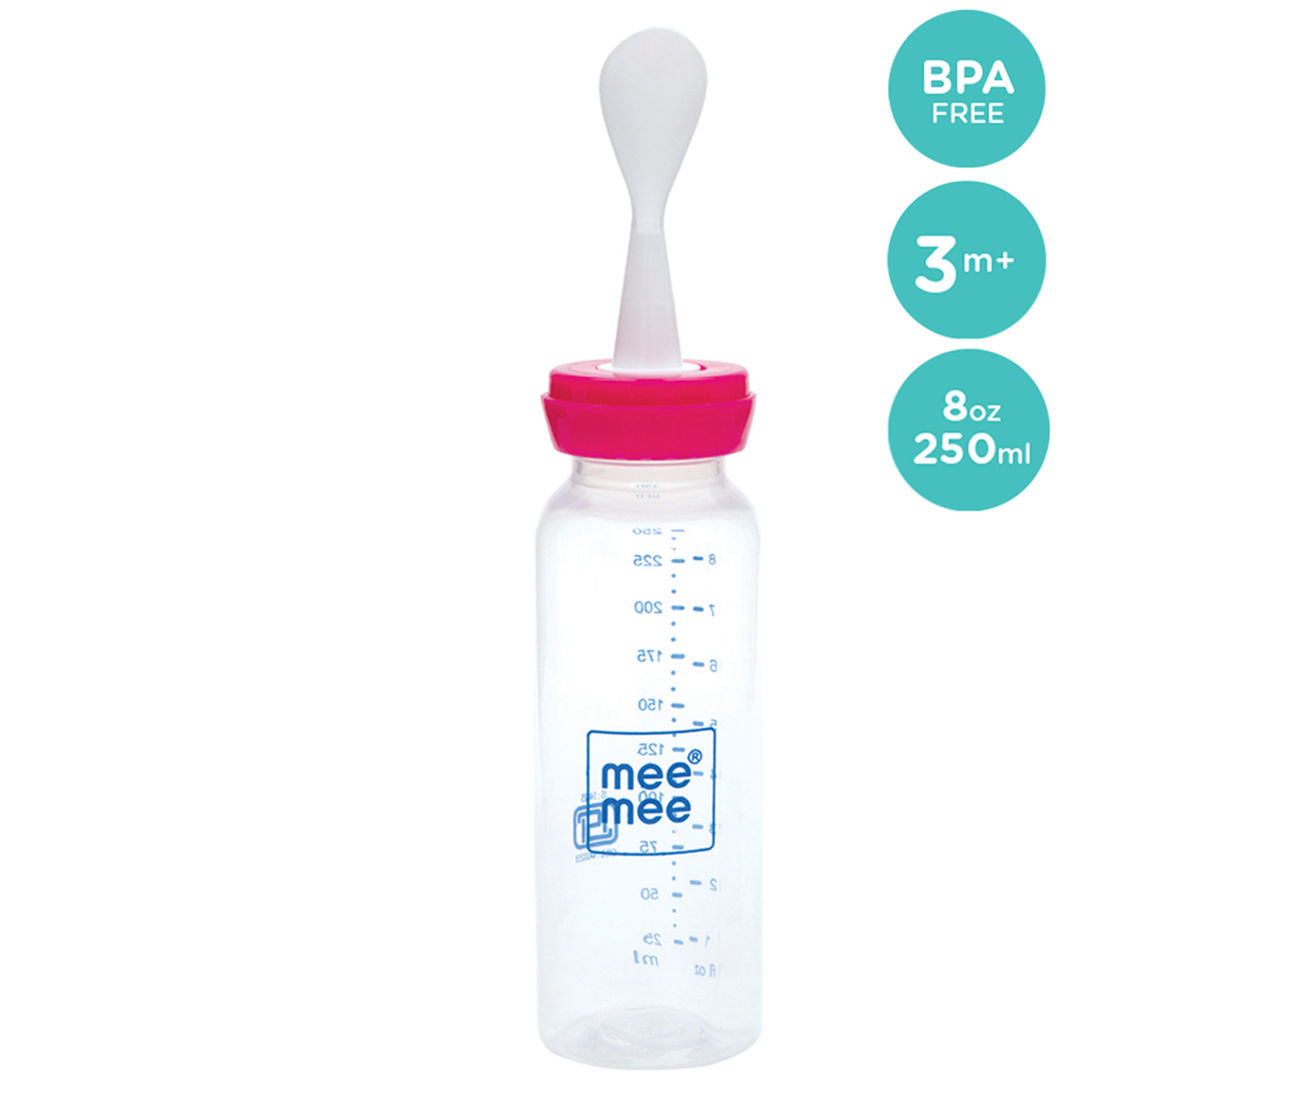 Mee  mee   Kids Baby Feeding Bottle Multifunctional Milk Feeder Bottle for Infant New born Toddler   2 in 1 Bottle With Spoon BPA Free  125 ml 3+Months